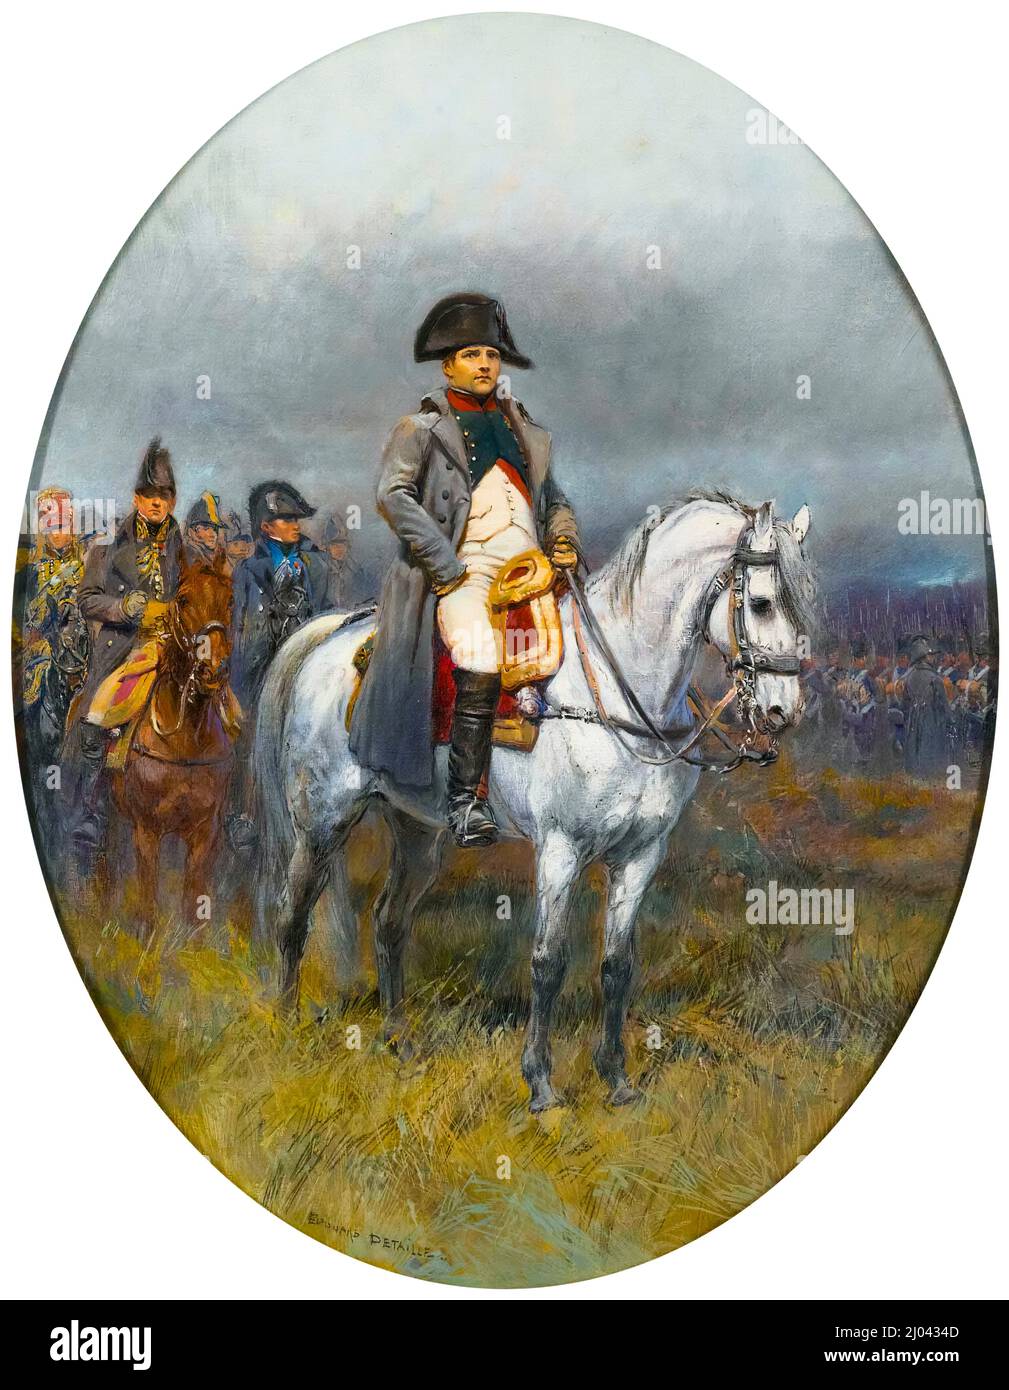 Napoleon Bonaparte on Horseback, oil on canvas equestrian portrait painting by Jean-Baptiste-Edouard Detaille, before 1912 Stock Photo